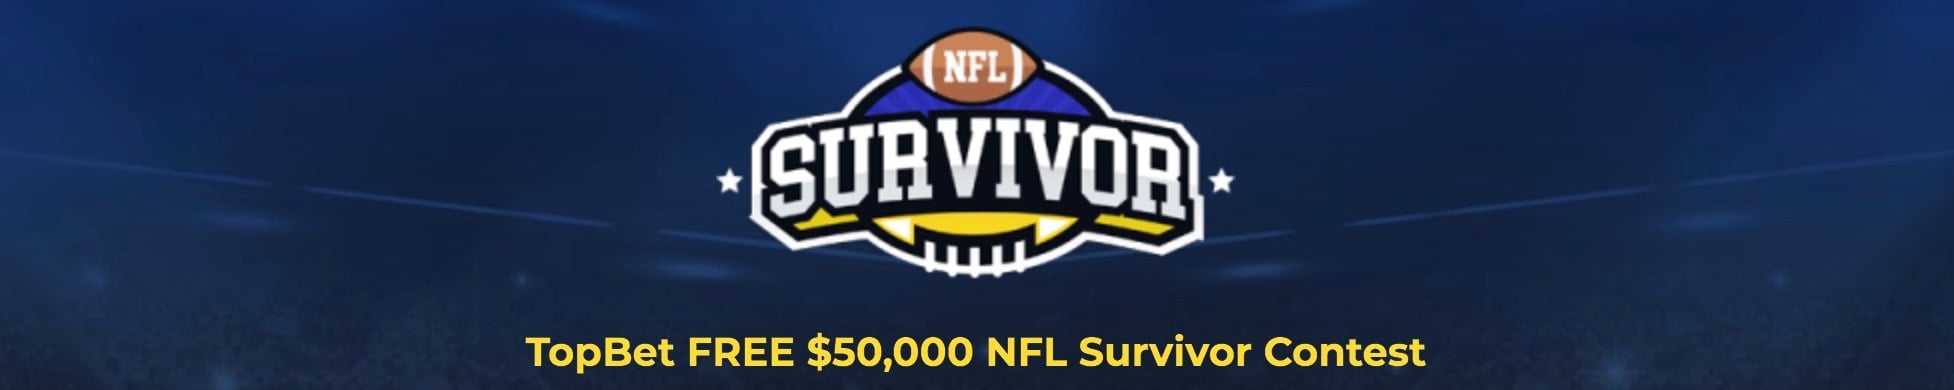 Best NFL Survivor Pool Site 2020